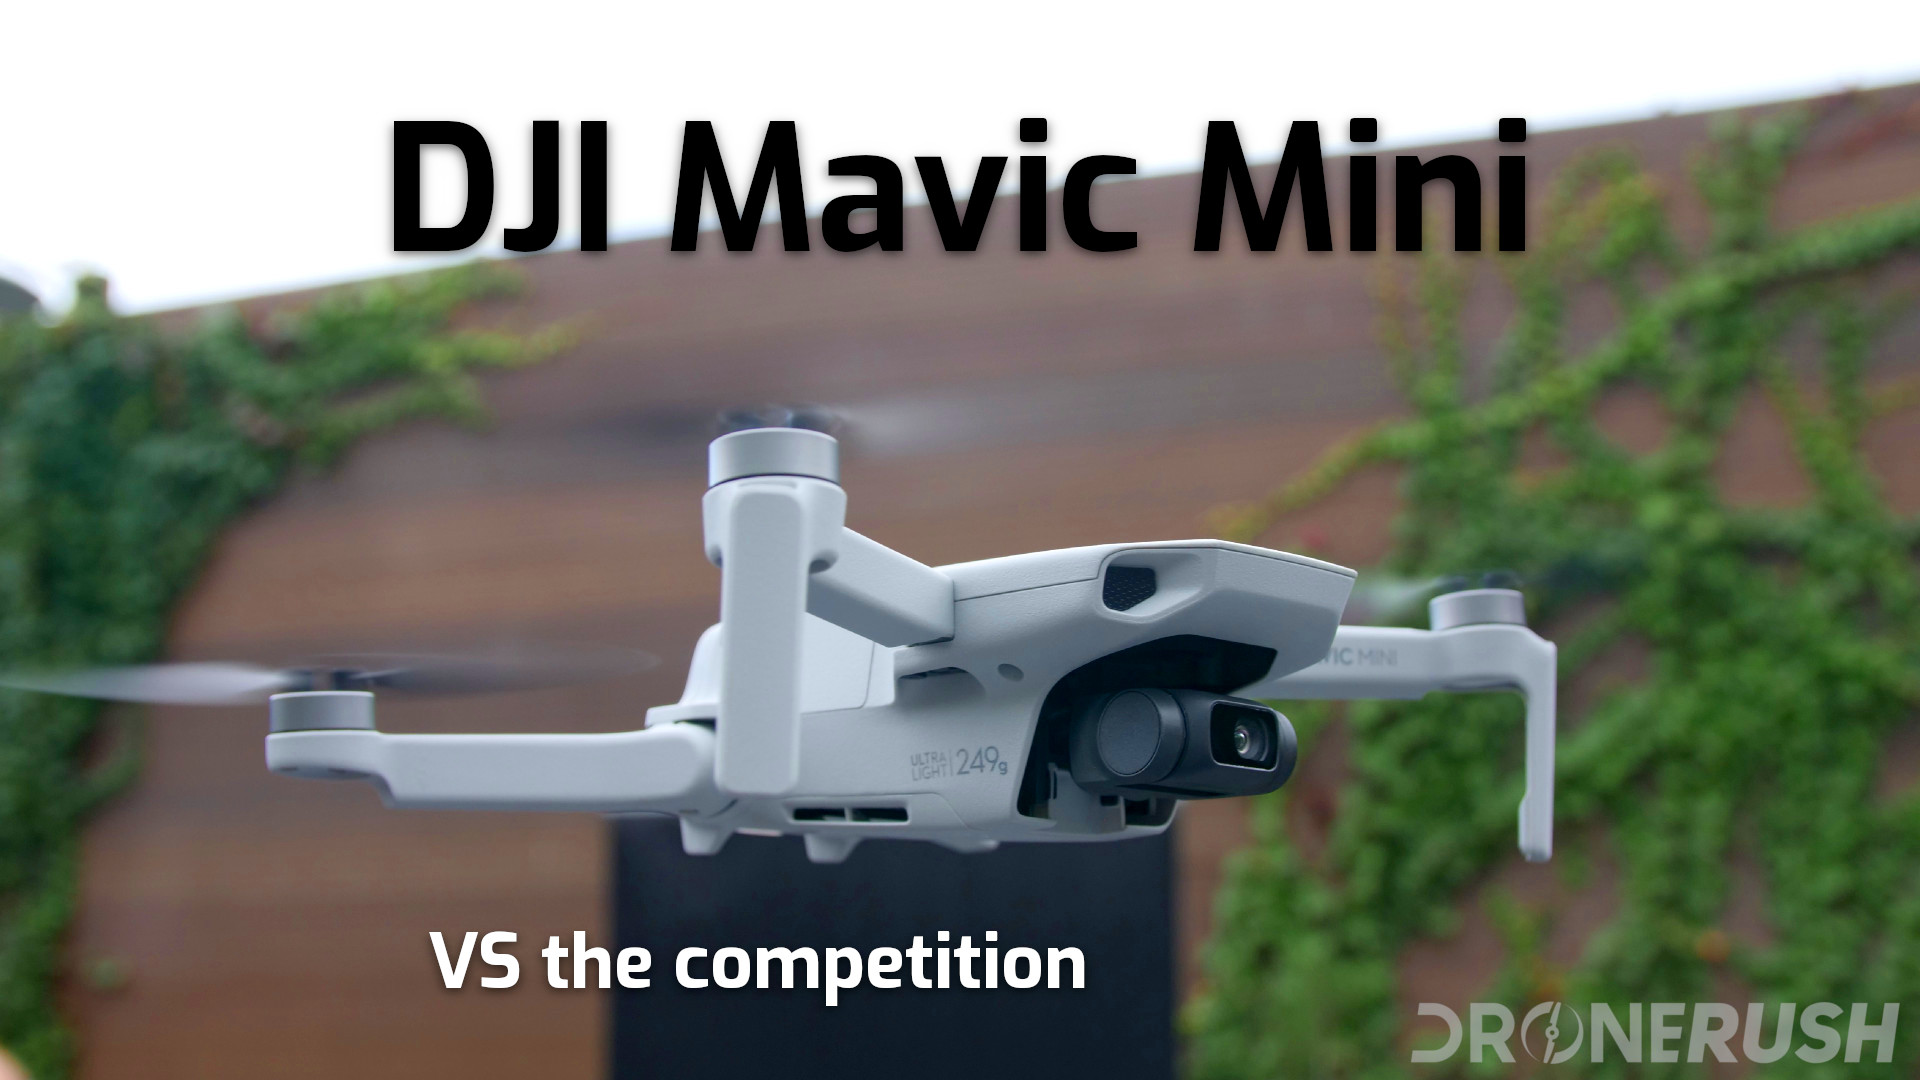 DJI Mavic Mini VS Syma X5C - Drone Rush